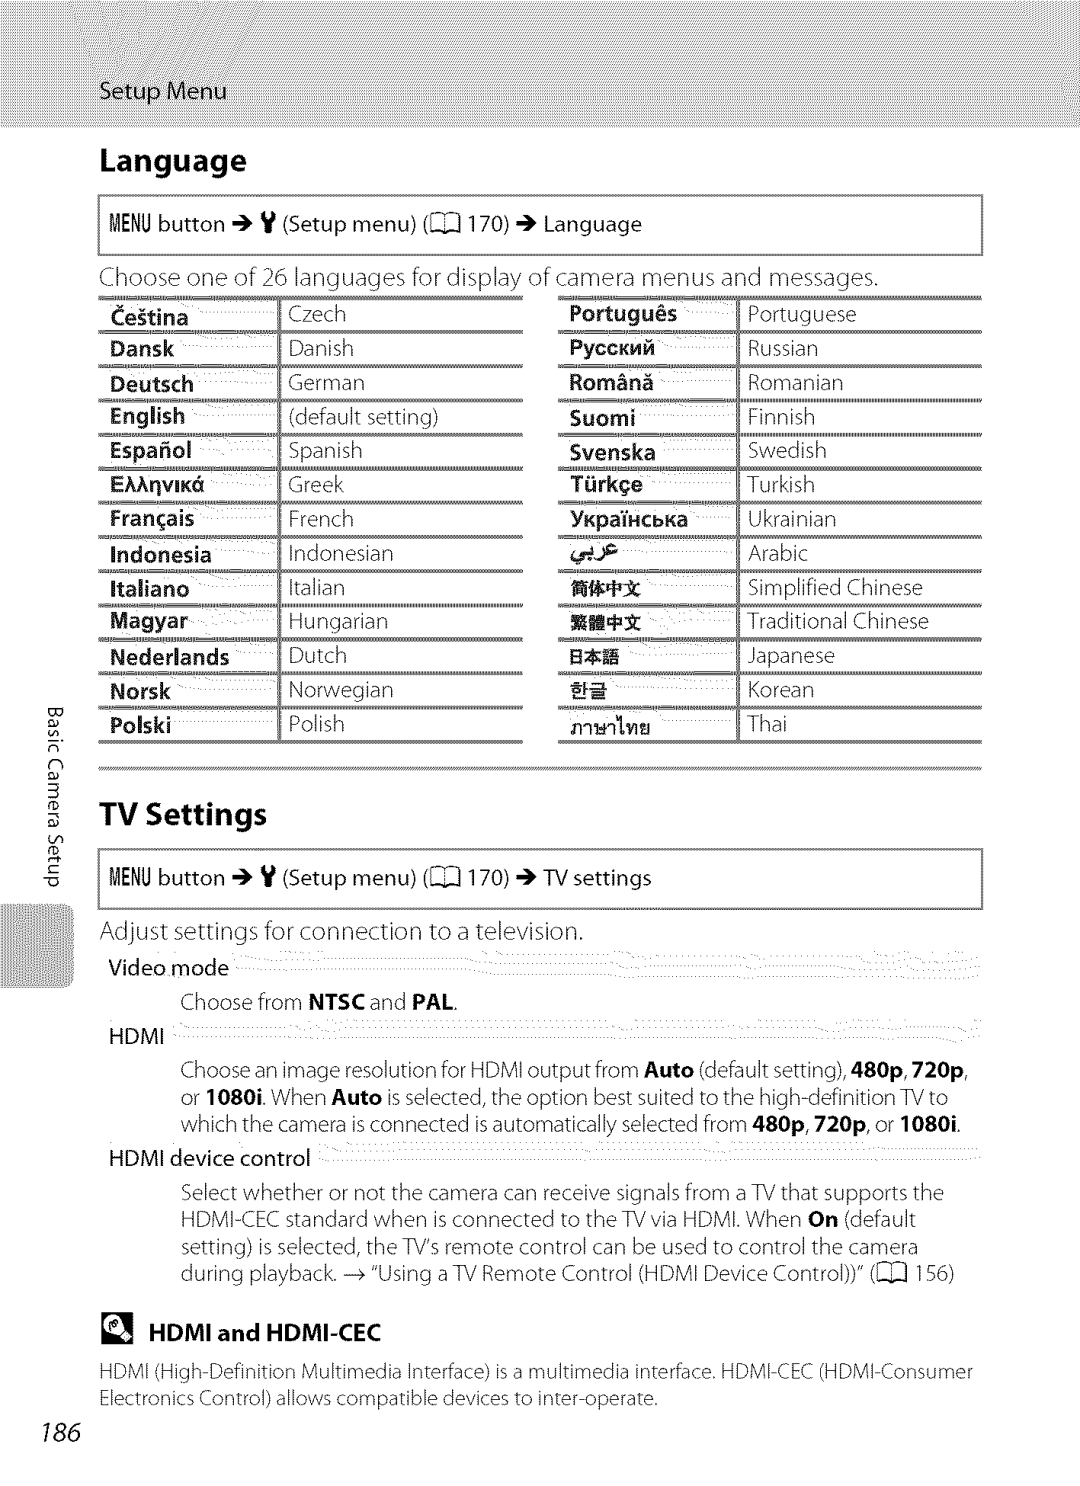 Nikon S9100 user manual Language, TV Settings, PyccR, Romn, Svenska, T6rke, Nederlands, HDMI and HDMI-CEC 